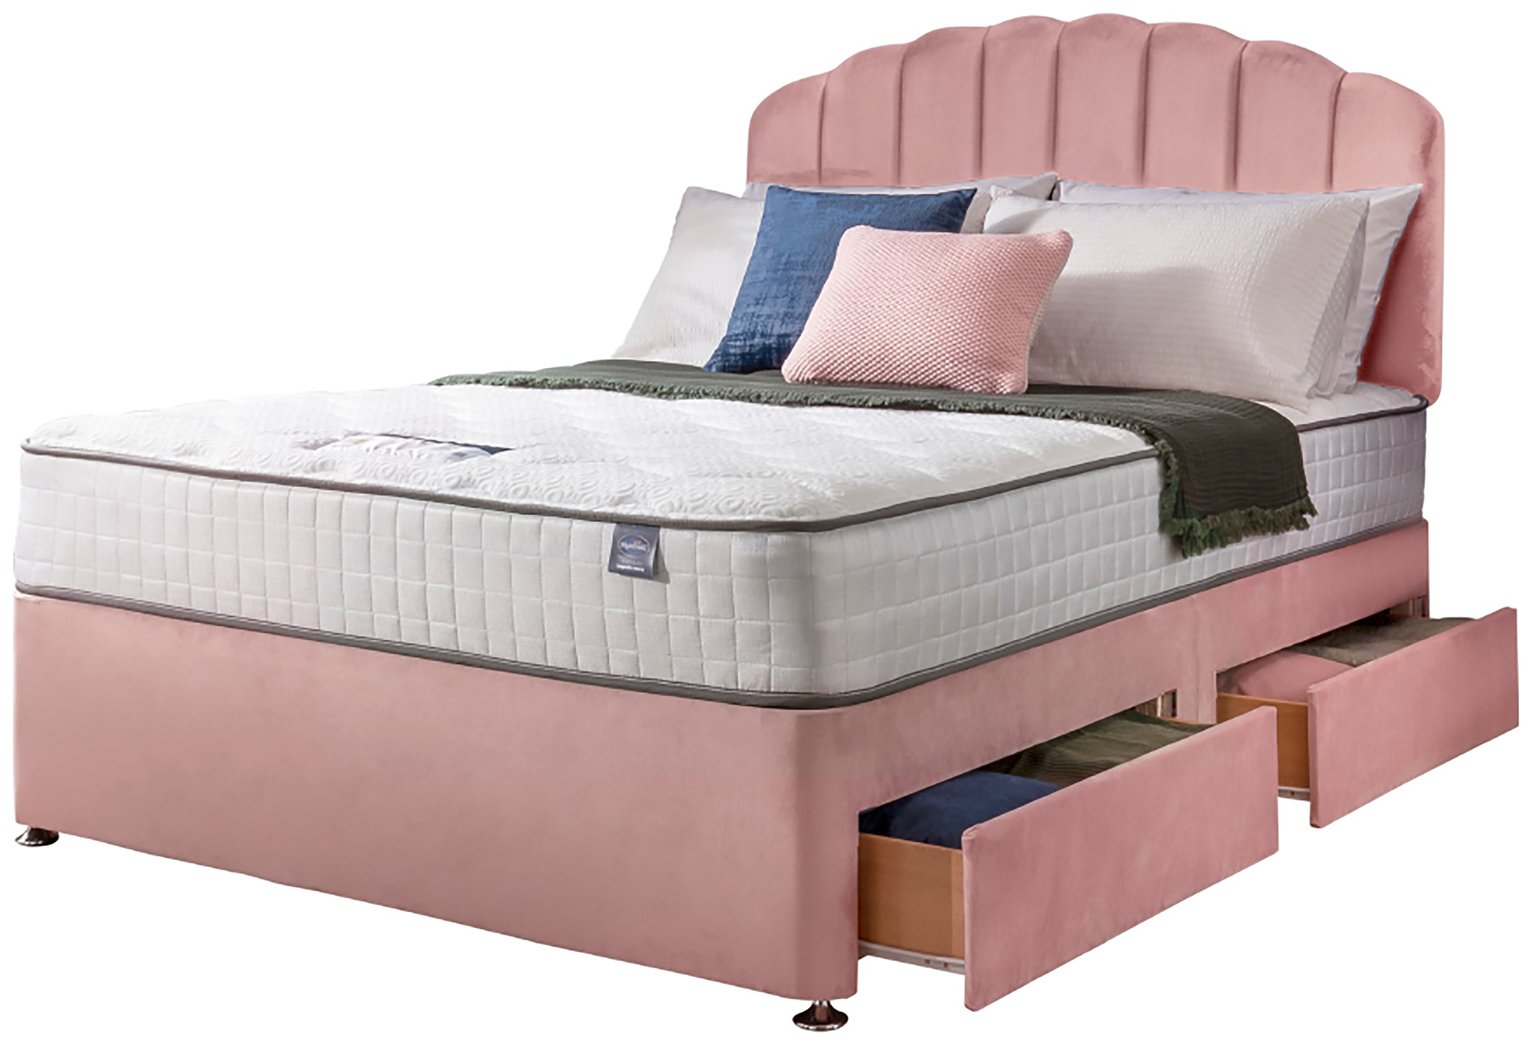 Silentnight Memory Kingsize 4 Drawer Divan Bed - Pink